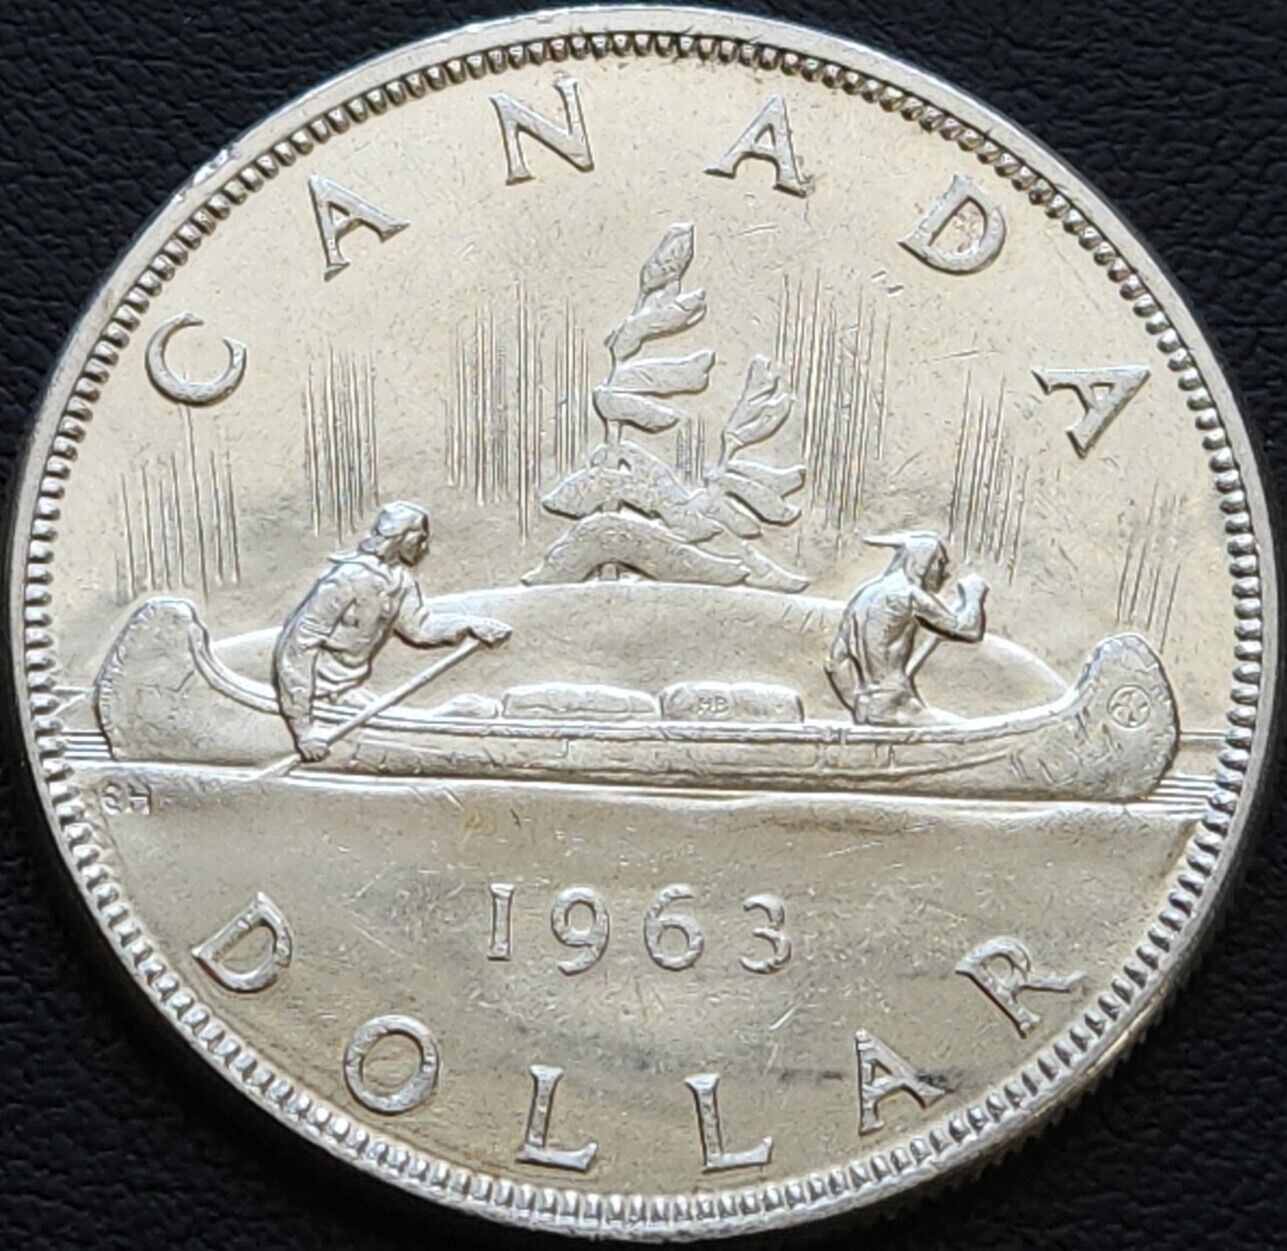 1963 Canada Silver $1 Dollar Coin - 80% Silver - Great Condition